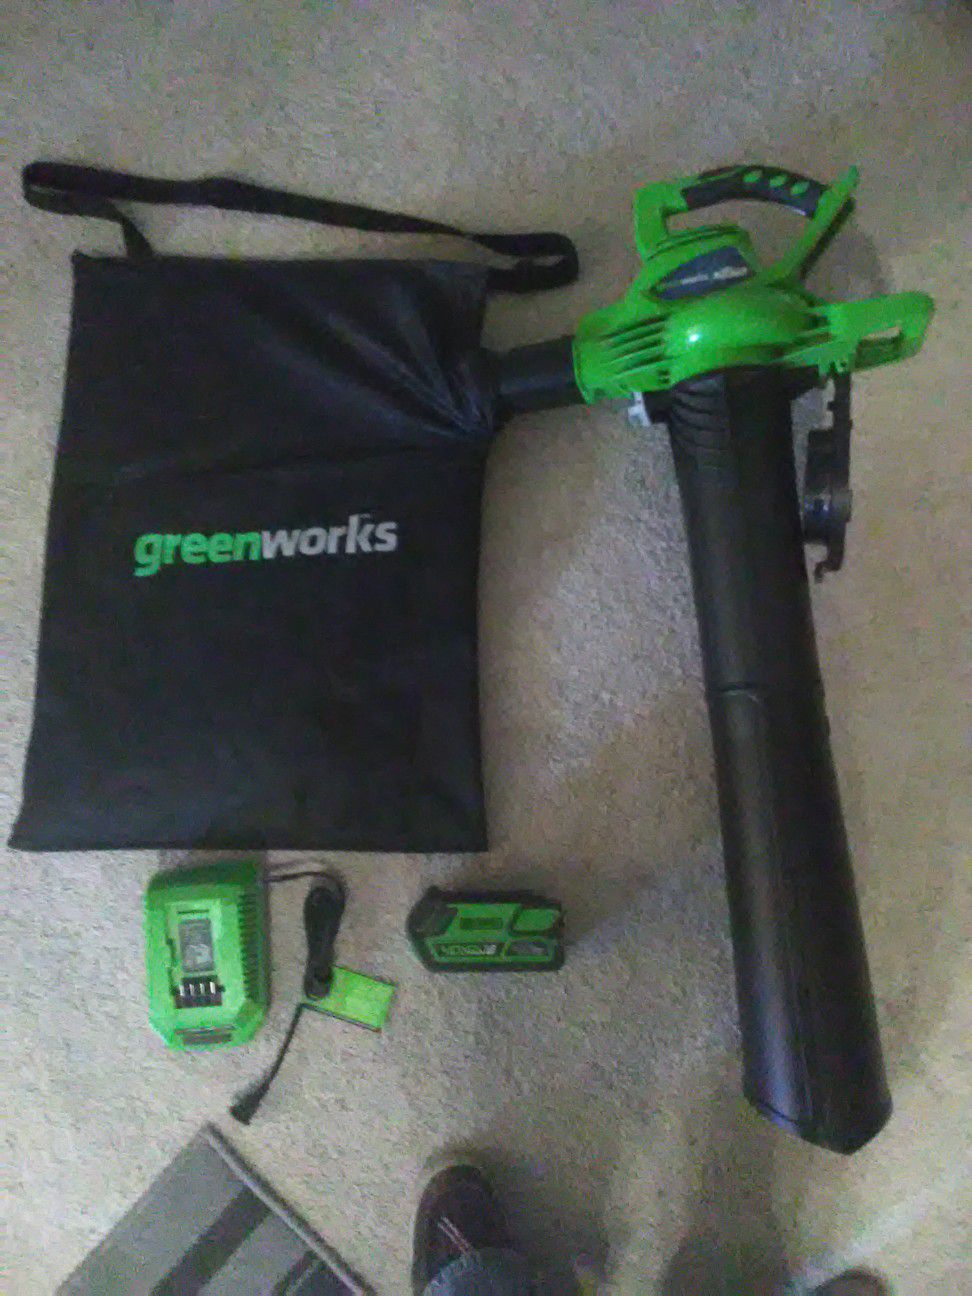 Green works leaf blower / collector unit